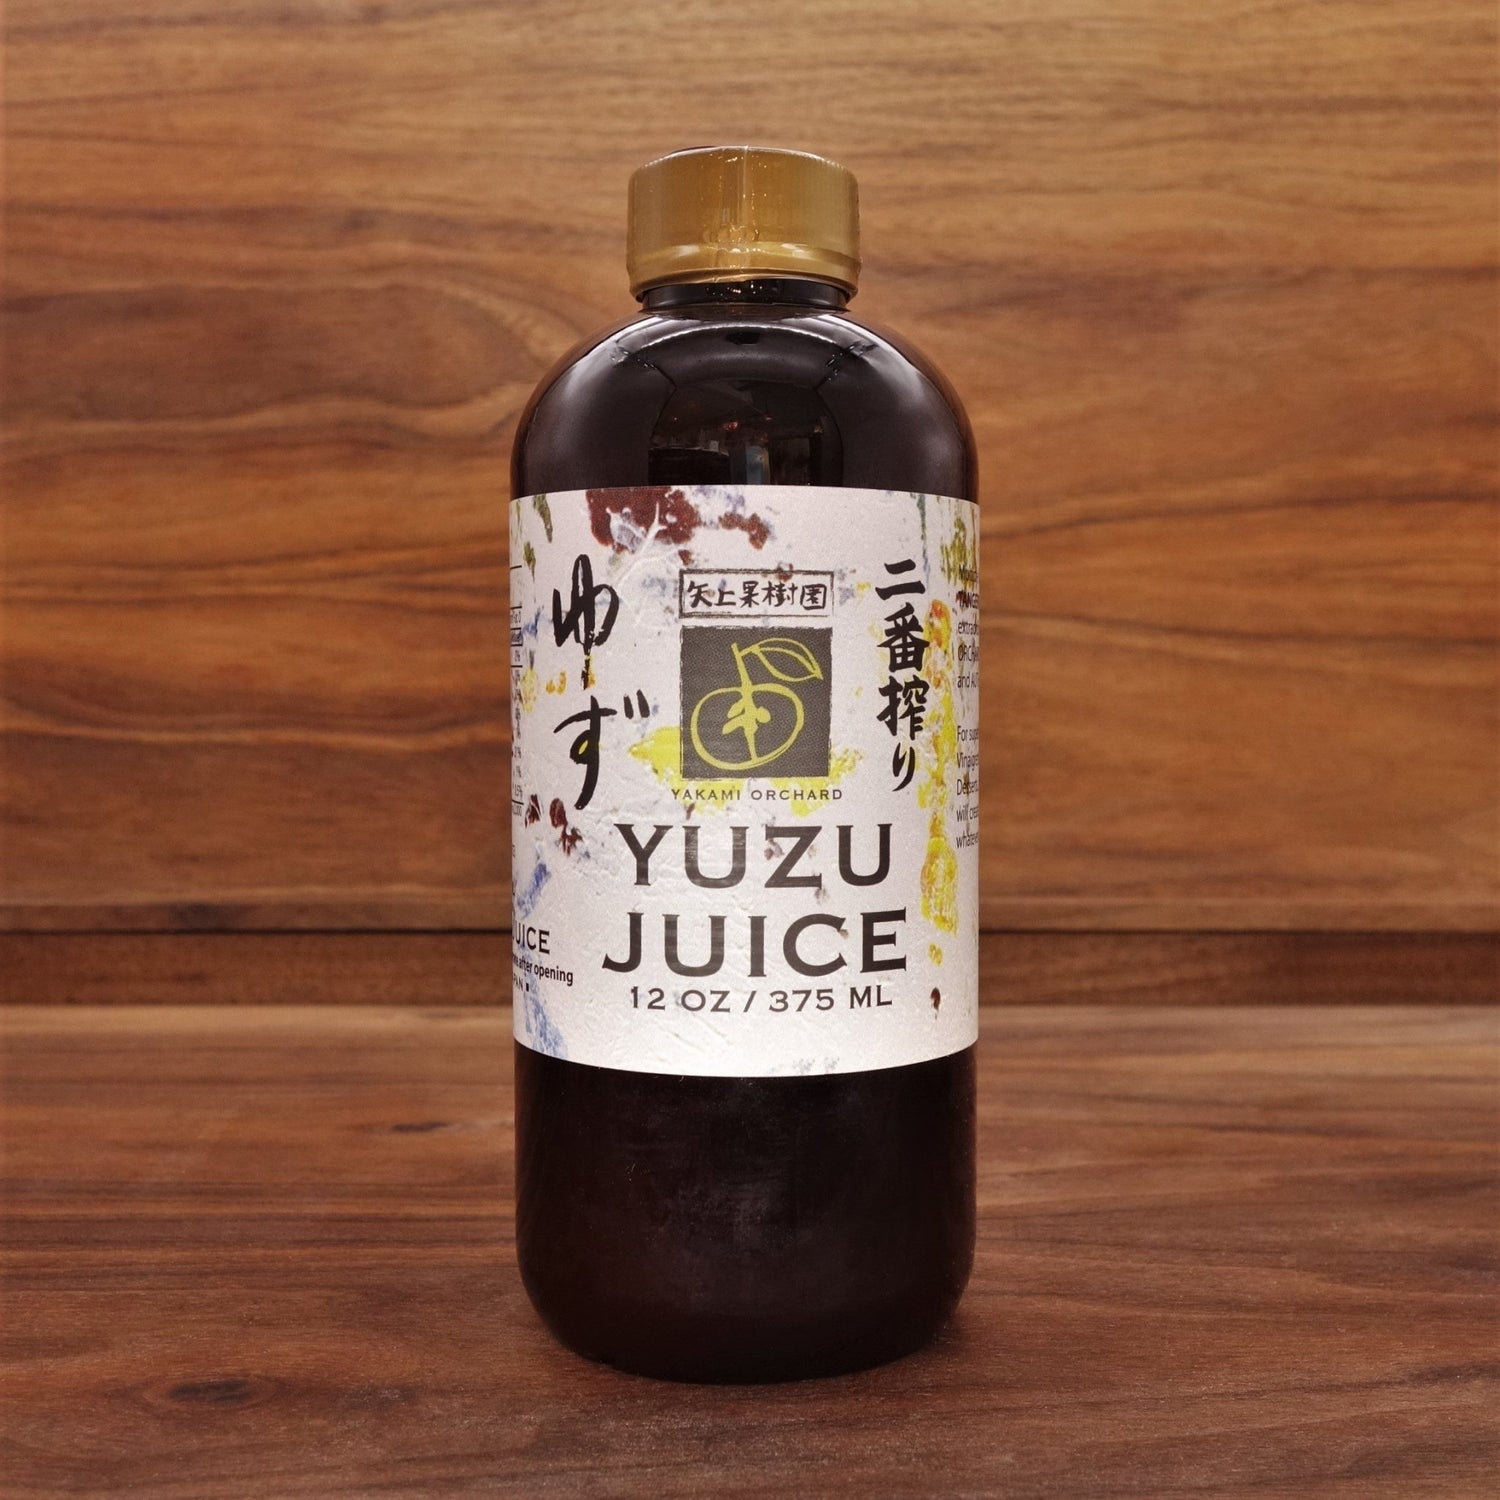 Yakami Orchard - Yuzu Juice Niban Shibori 375mL - Mongers' Provisions